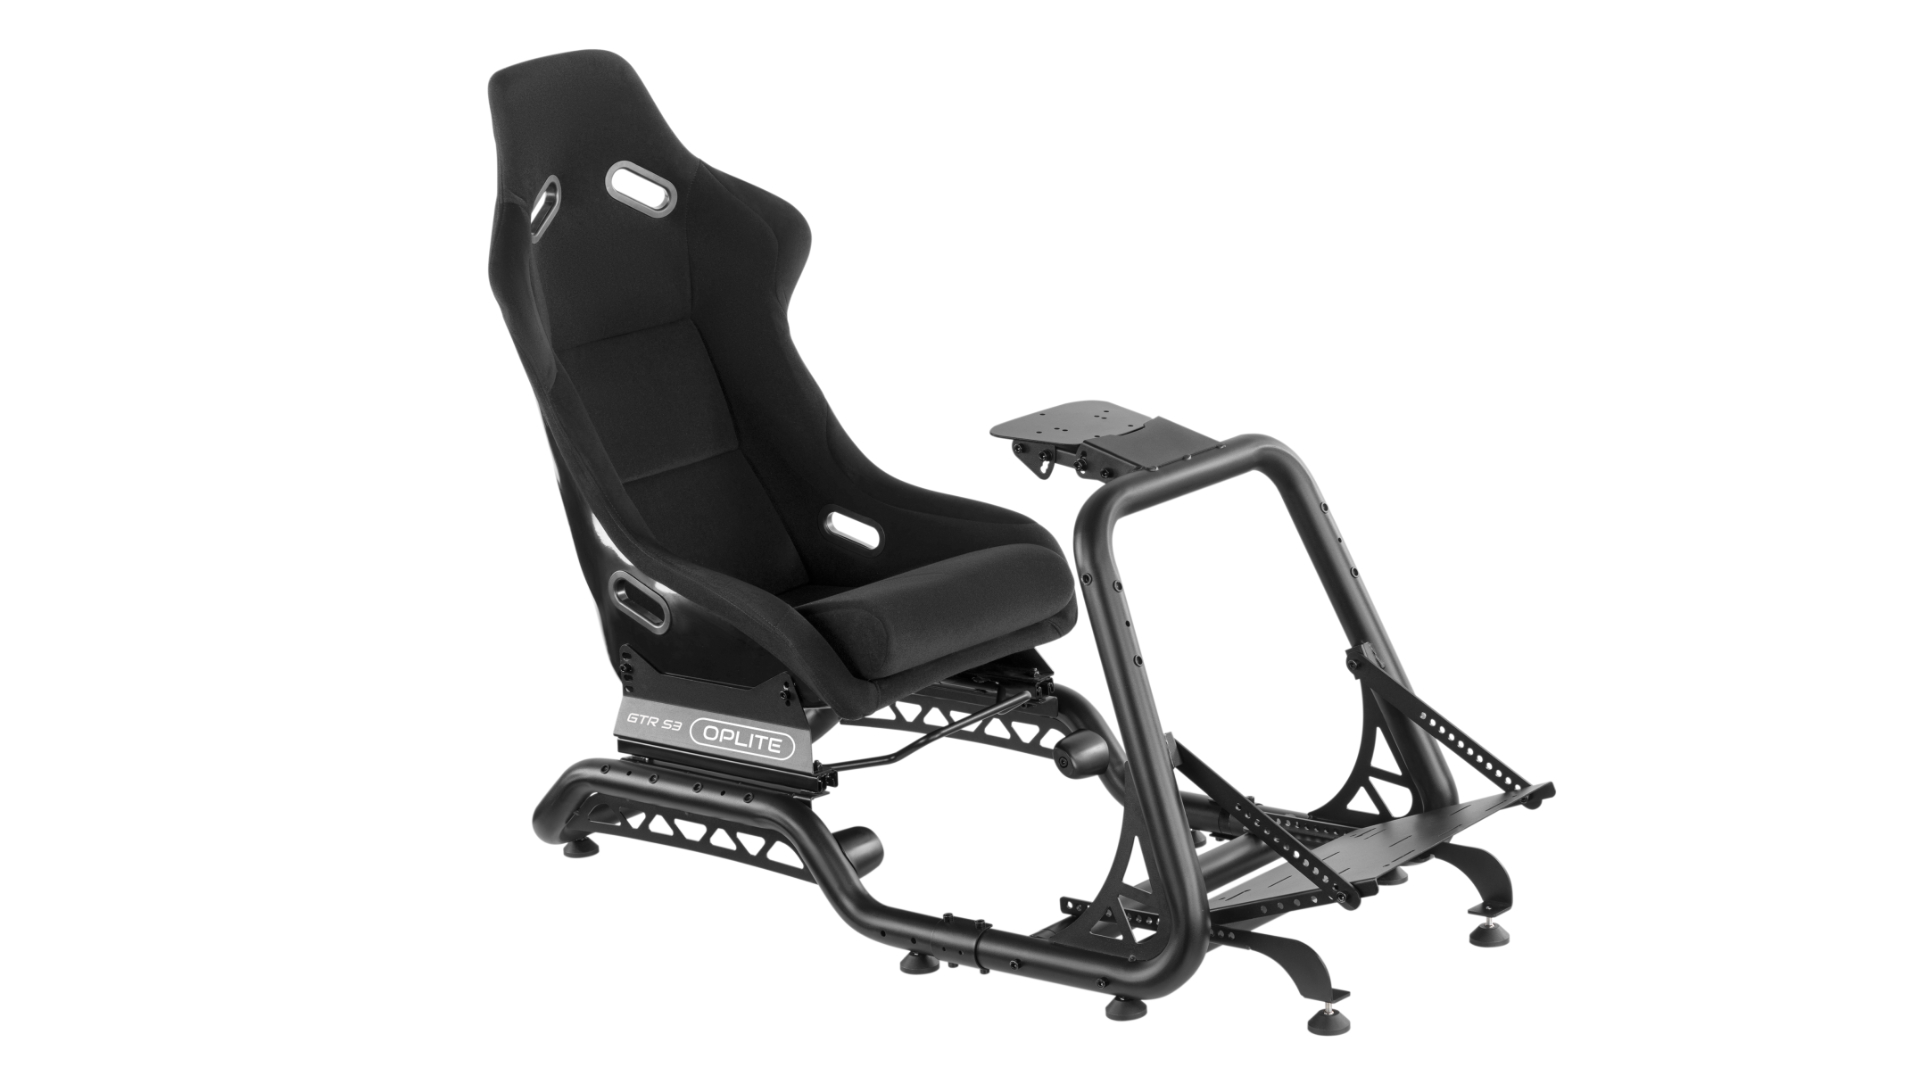 Oplite GT3 Superfast Racing Simulator Cockpit